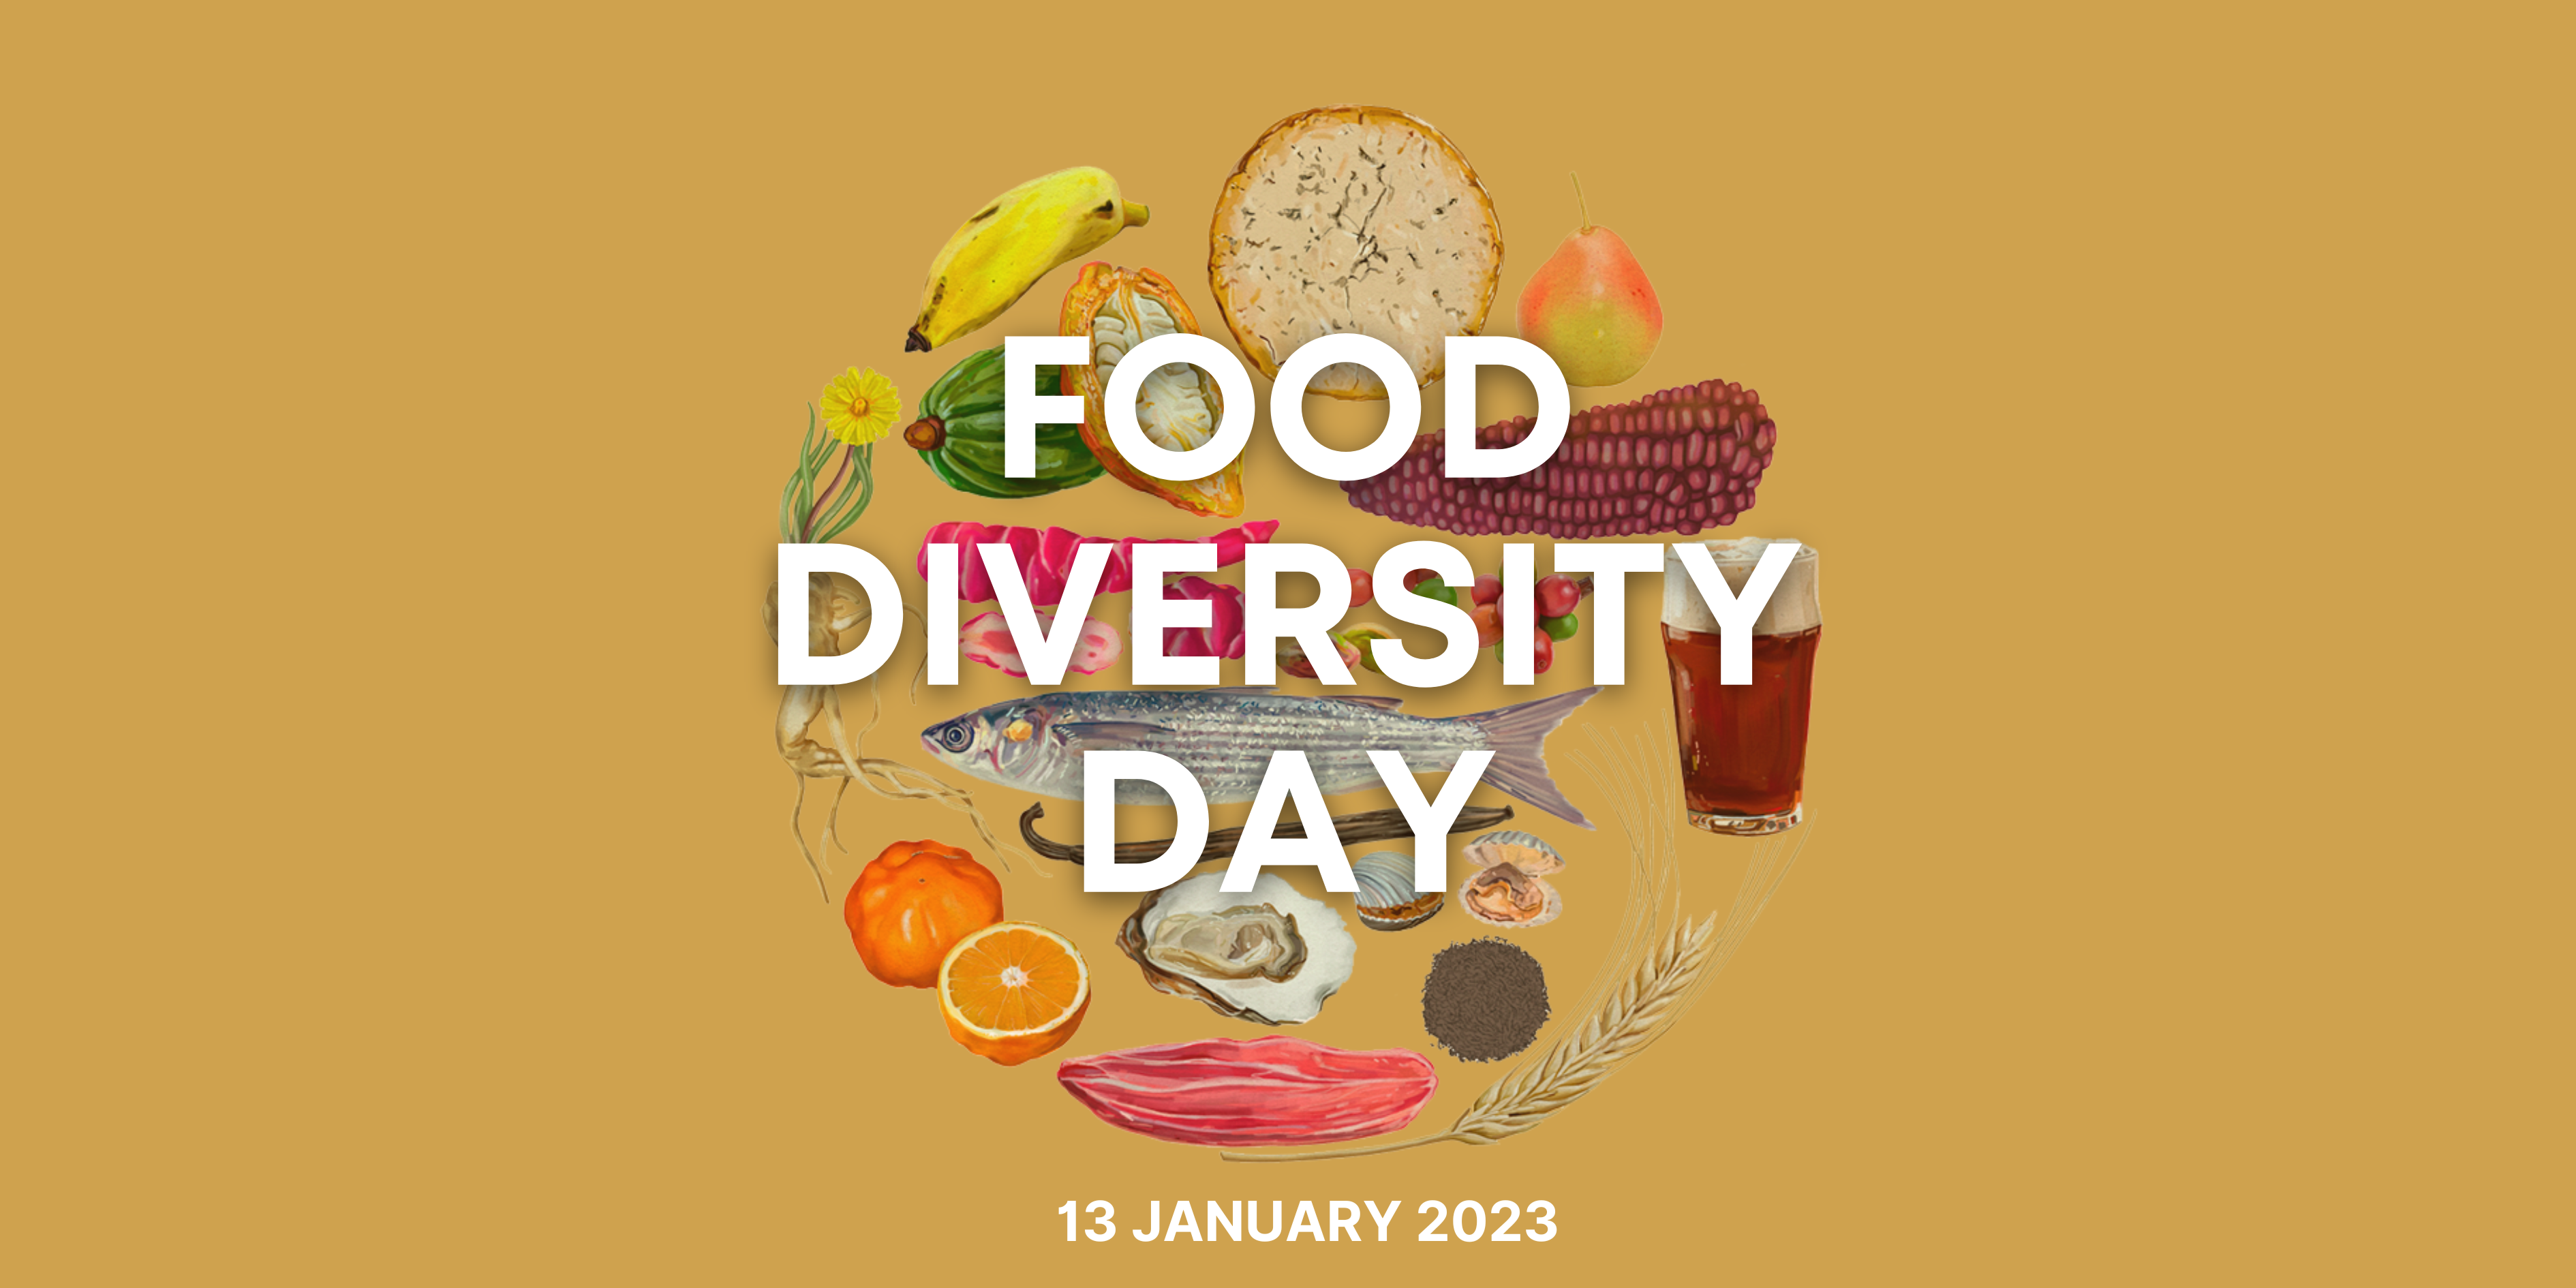 Happy Food Diversity Day!